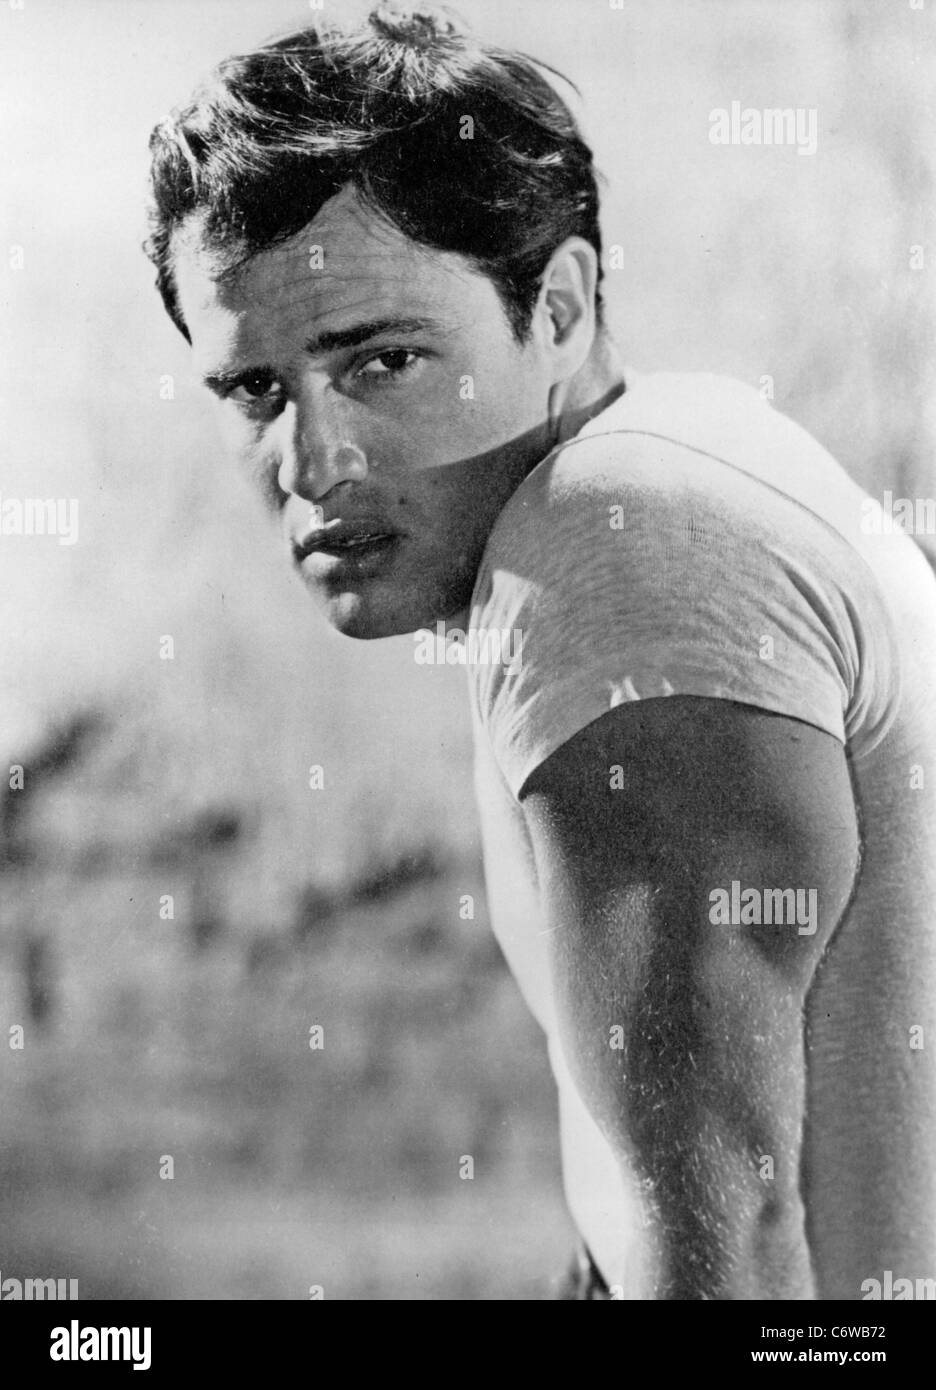 MARLON BRANDO US film actor about 1955 Stock Photo